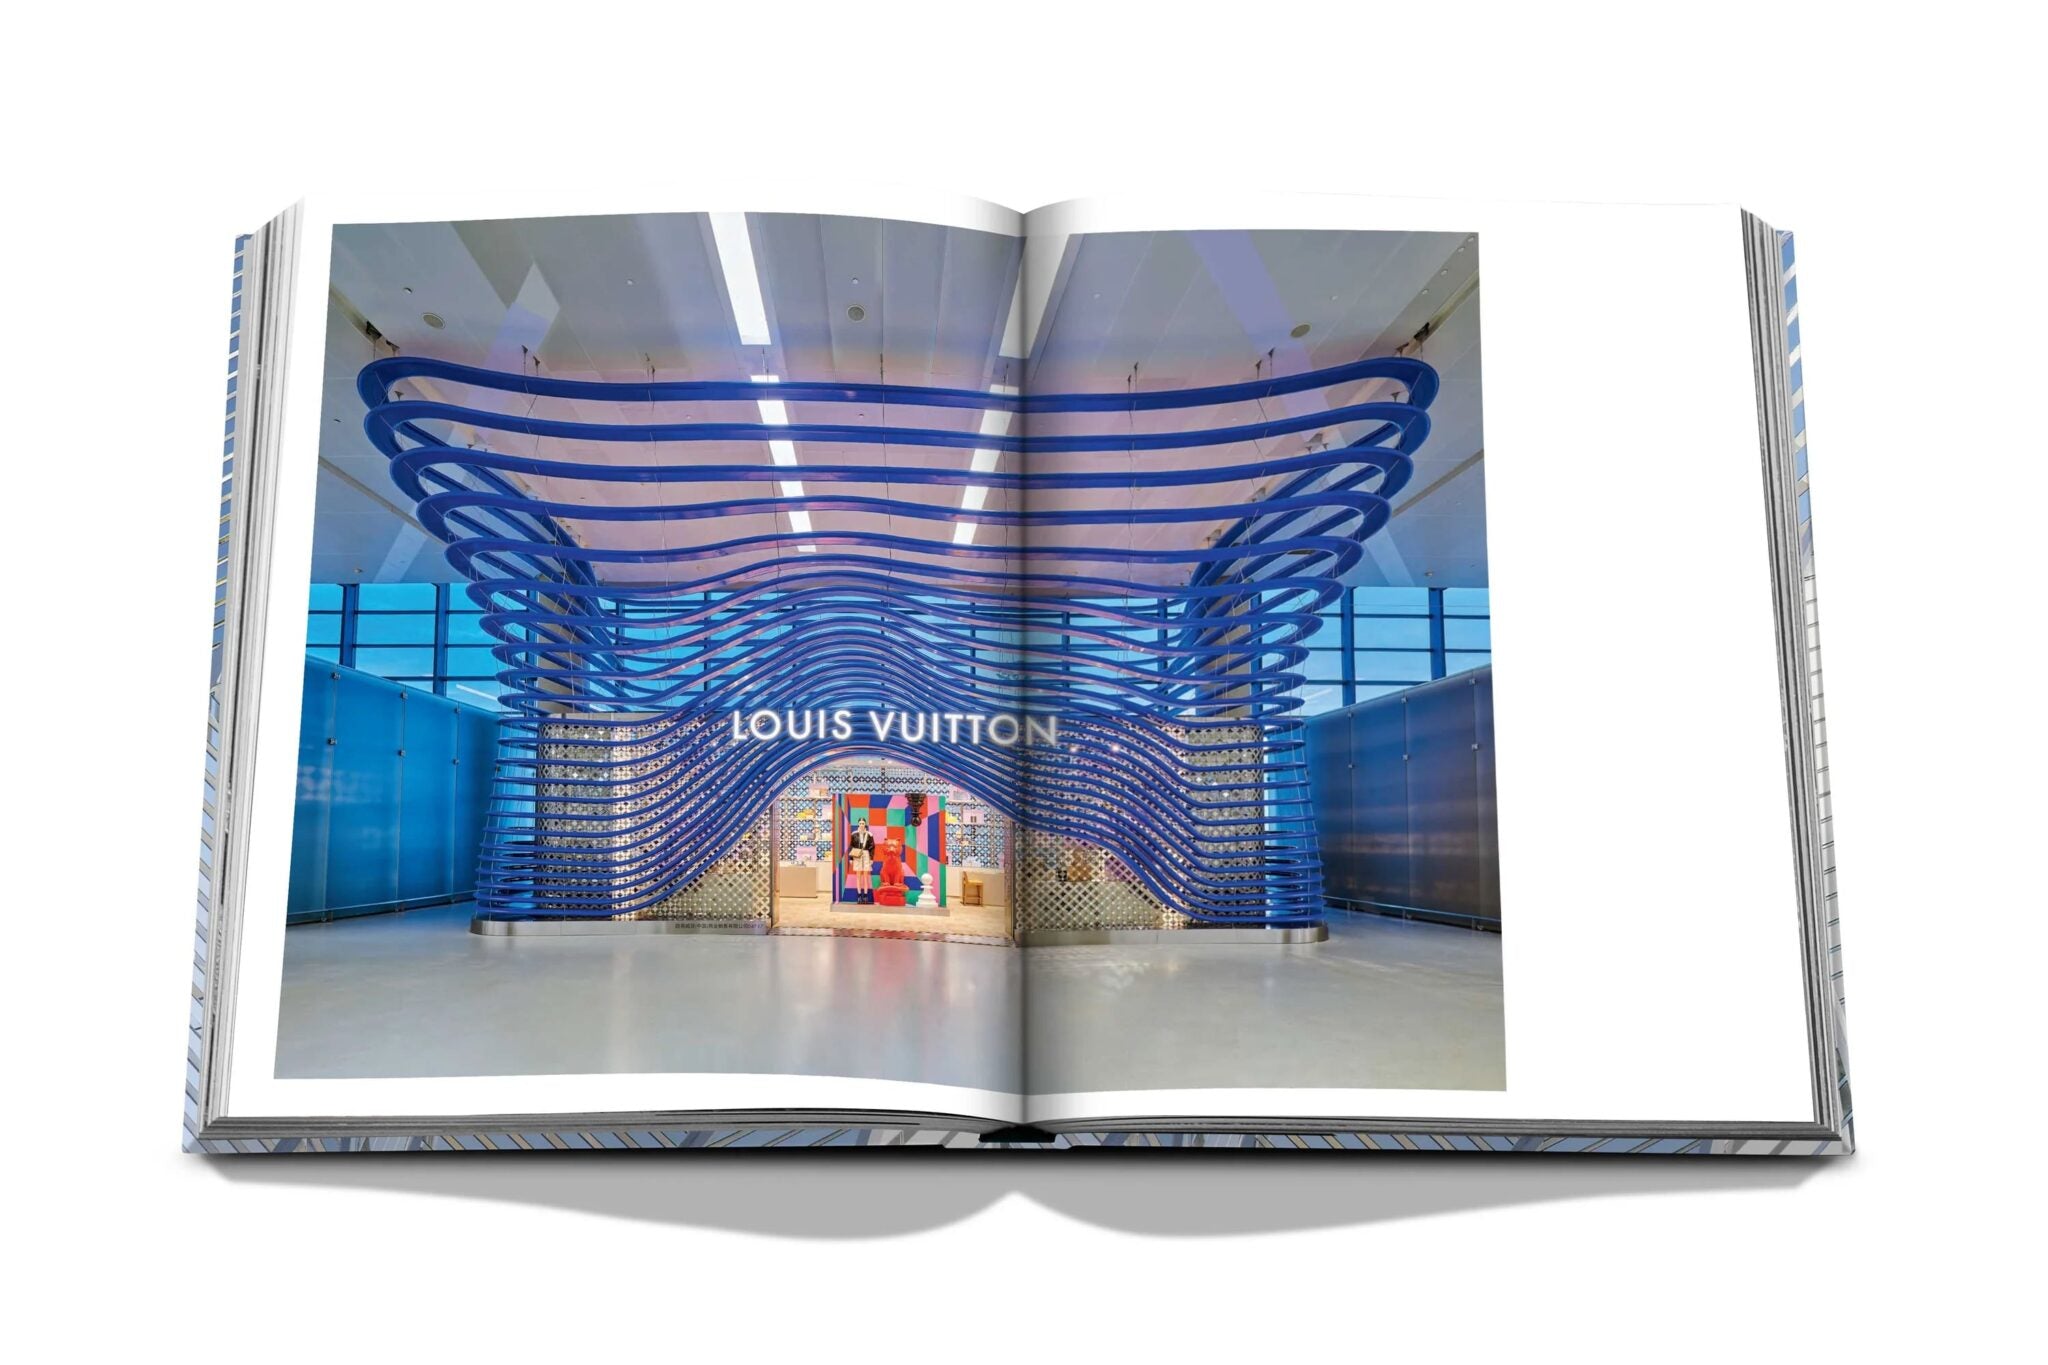 Assouline Louis Vuitton Skin: Architecture Of Luxury (Seoul Edition)